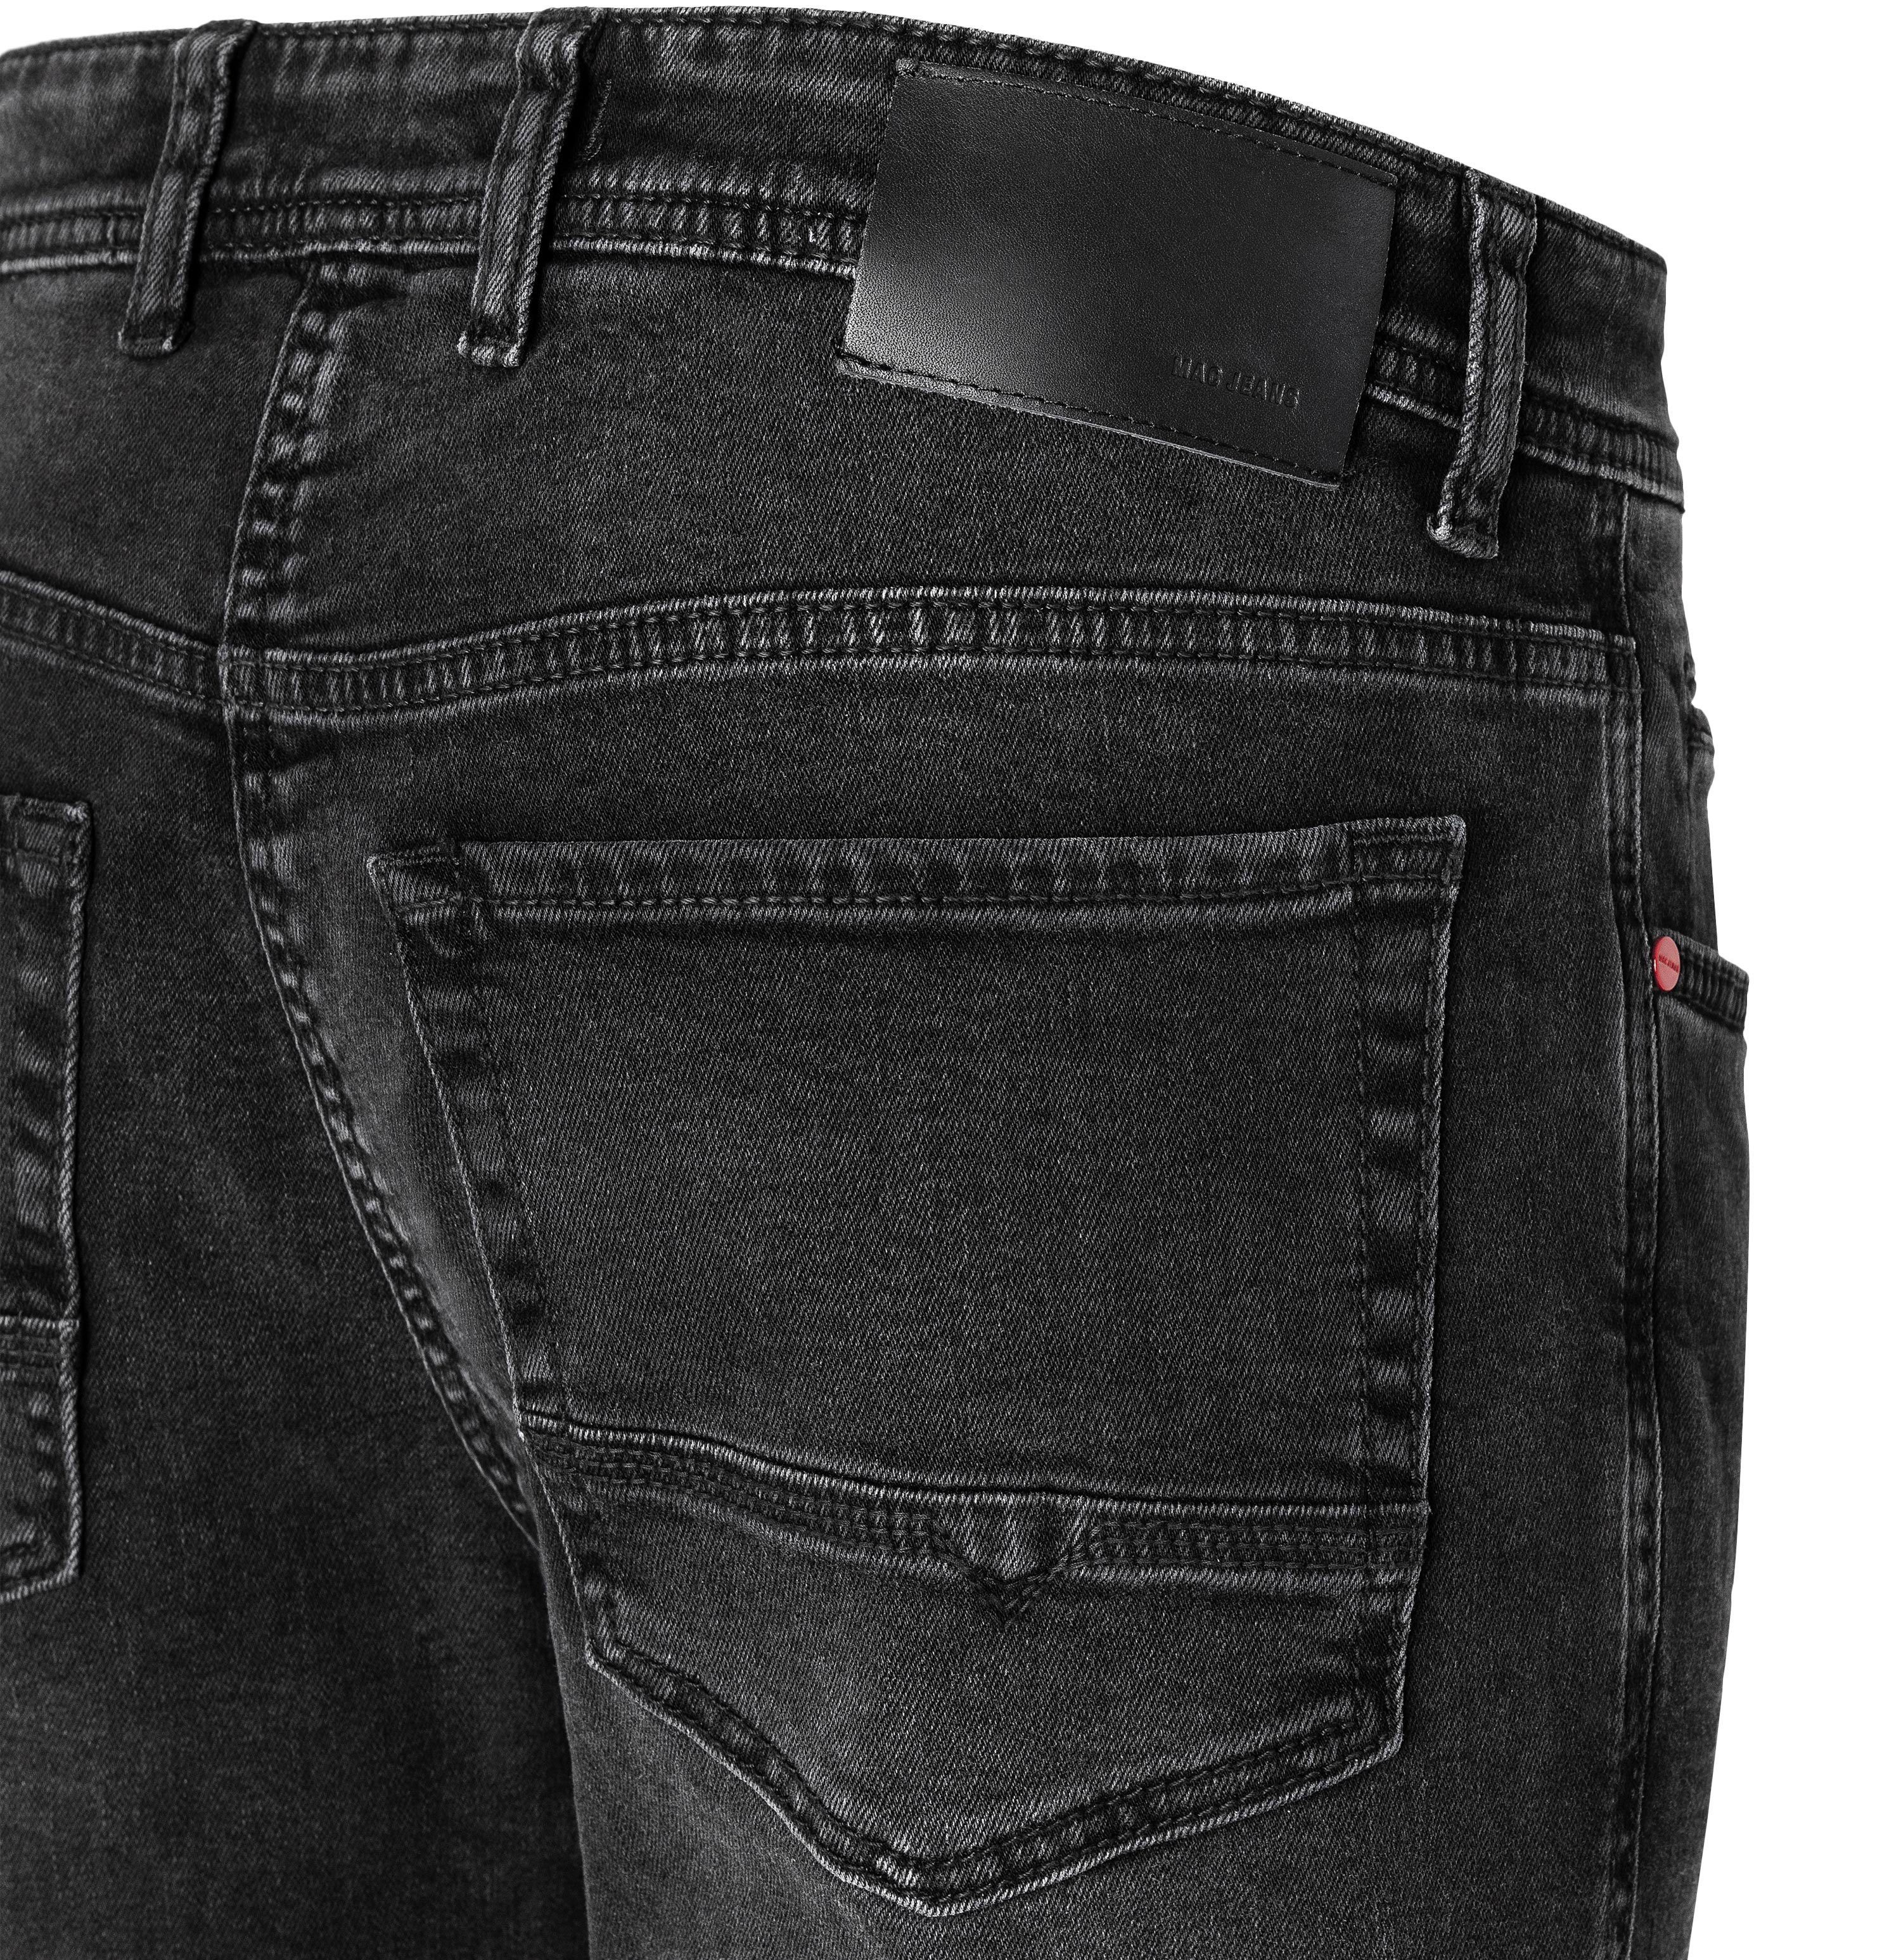 used stone Stretch Arne black Denim MAC 5-Pocket-Jeans